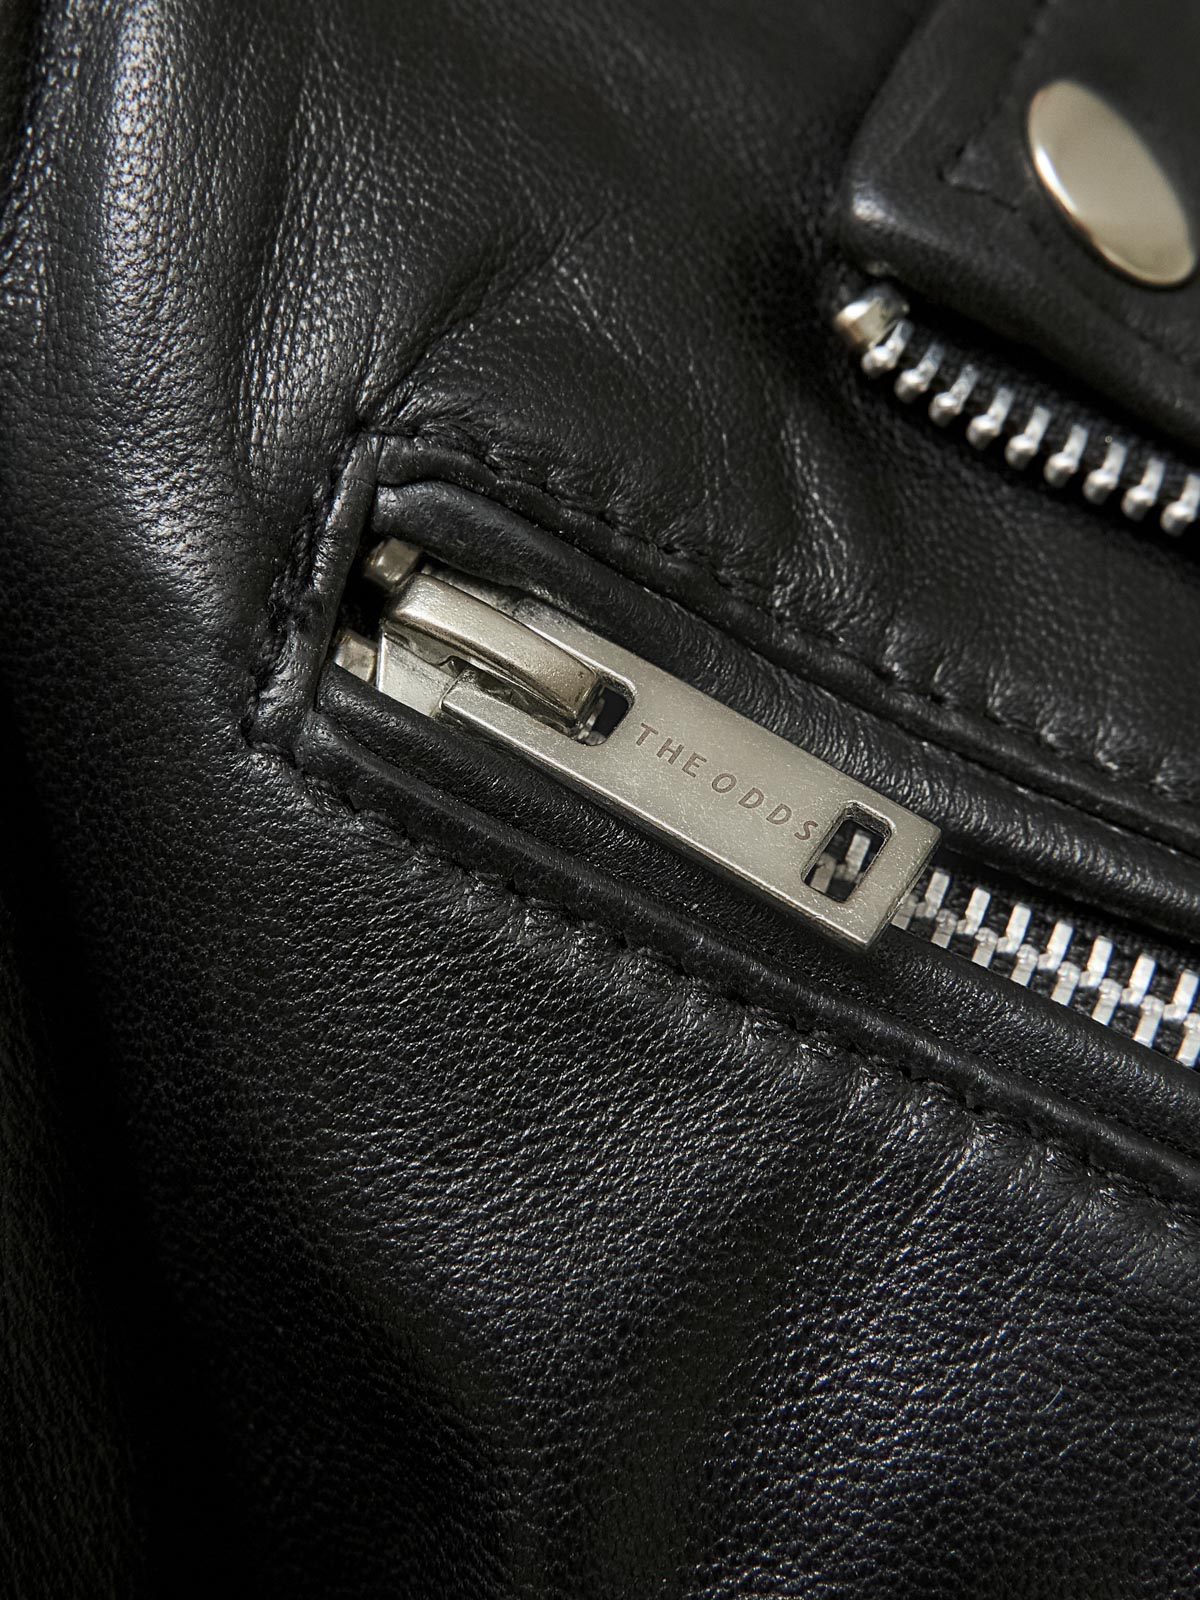 Carbon Matte Leather Jacket Women/ LMTD Edition